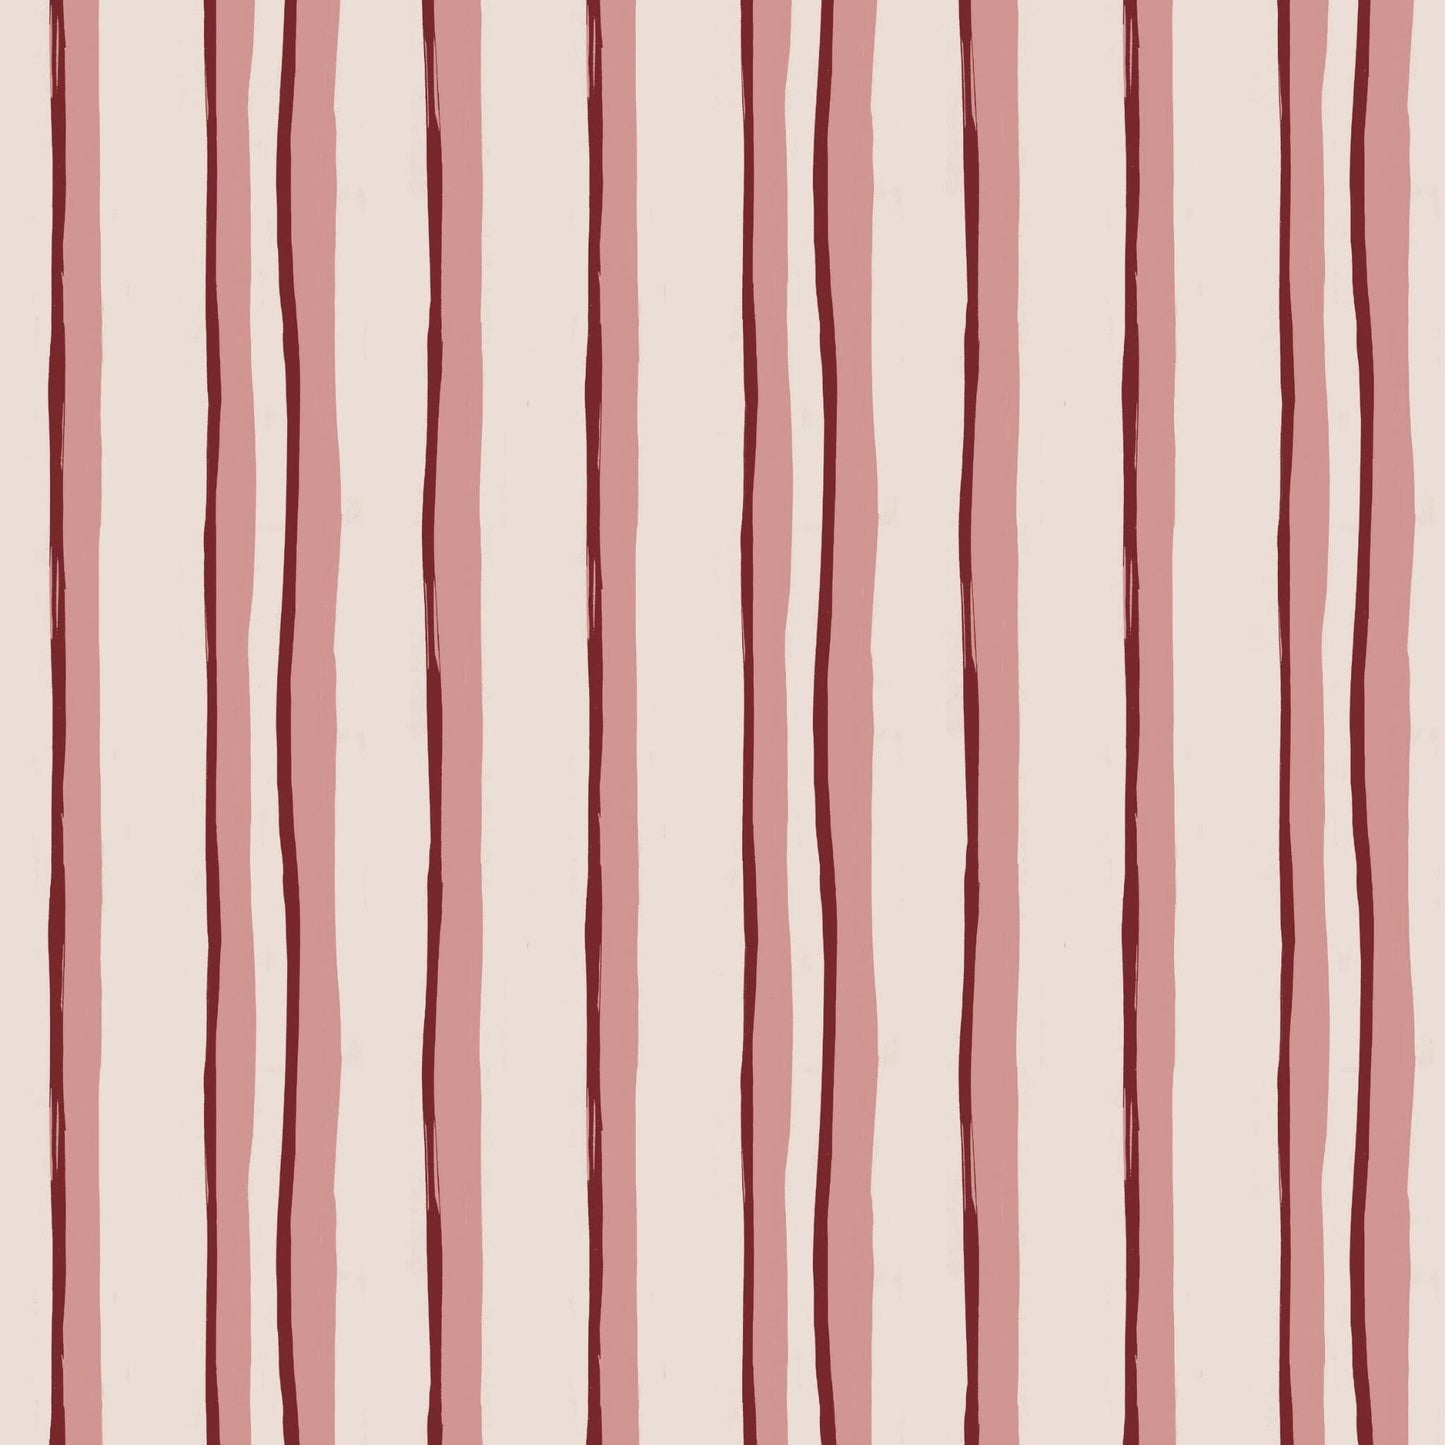 WALLPAPER ROLL Somerset Stripes Wallpaper - Pinks